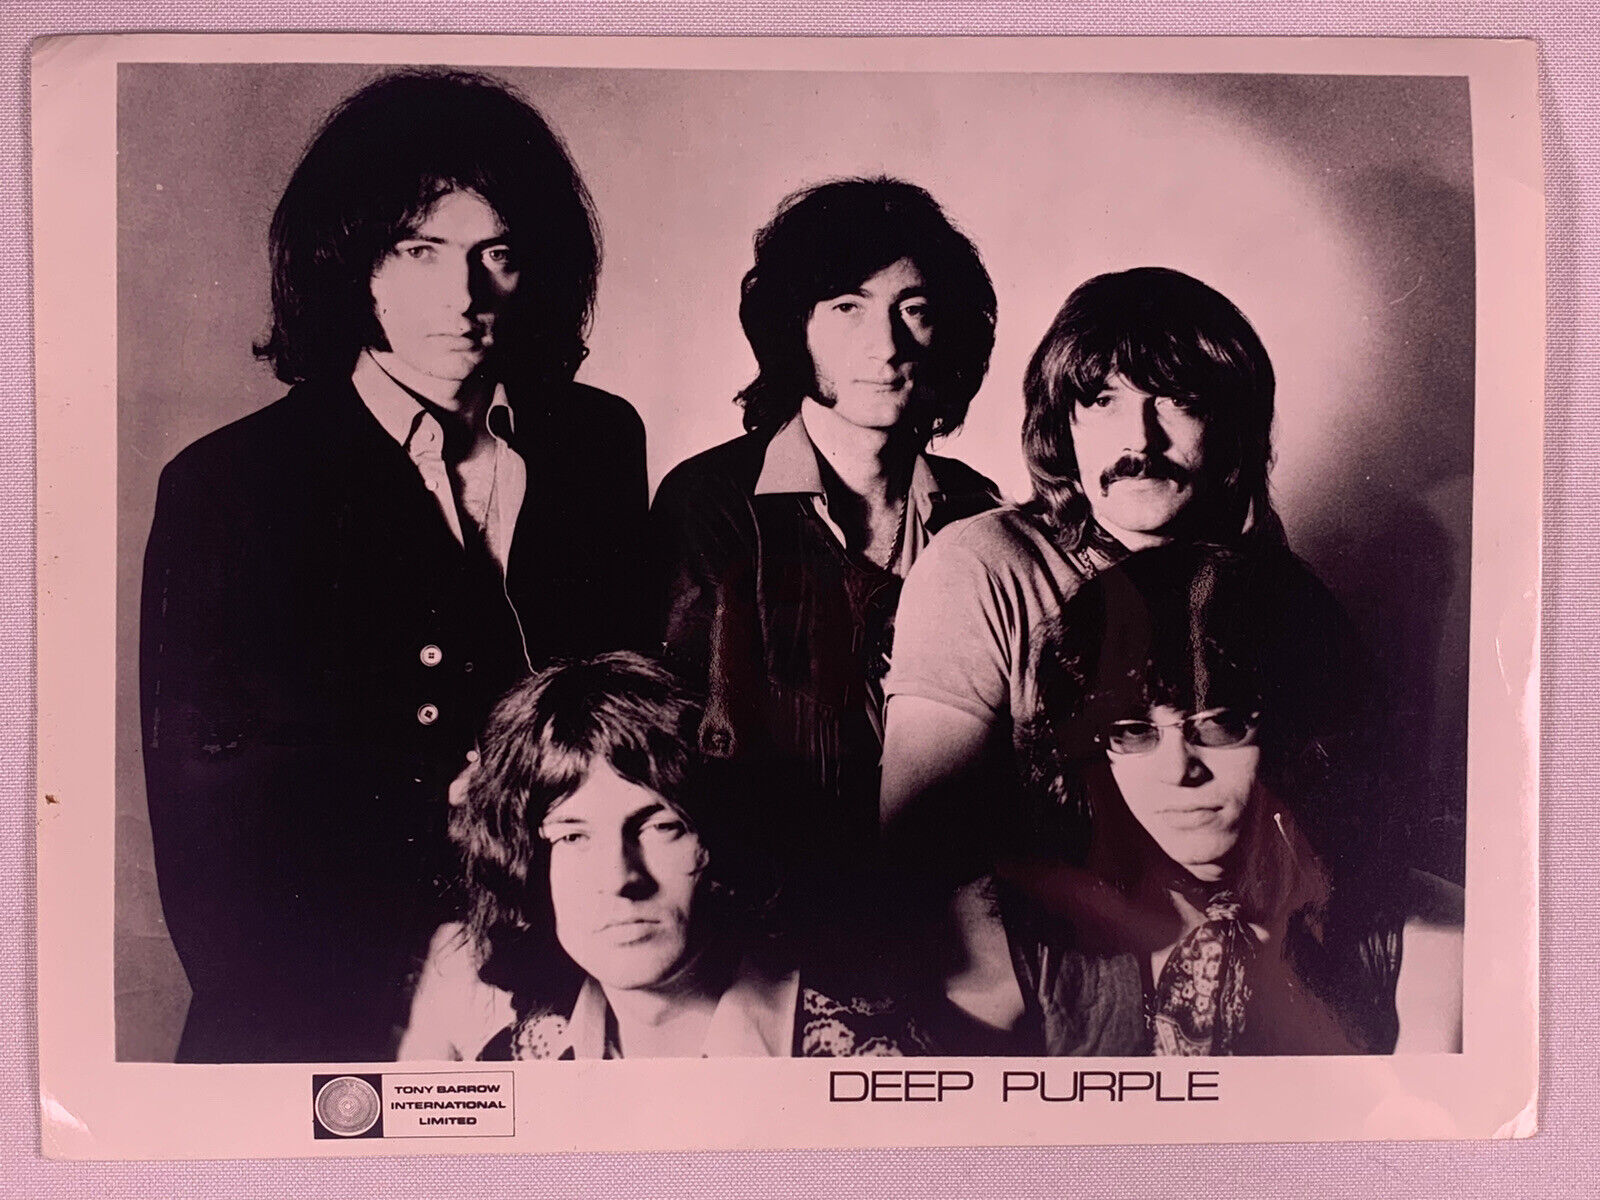 Deep Purple Photograph Vintage Promo Tony Barrow International Ltd Circa 1970